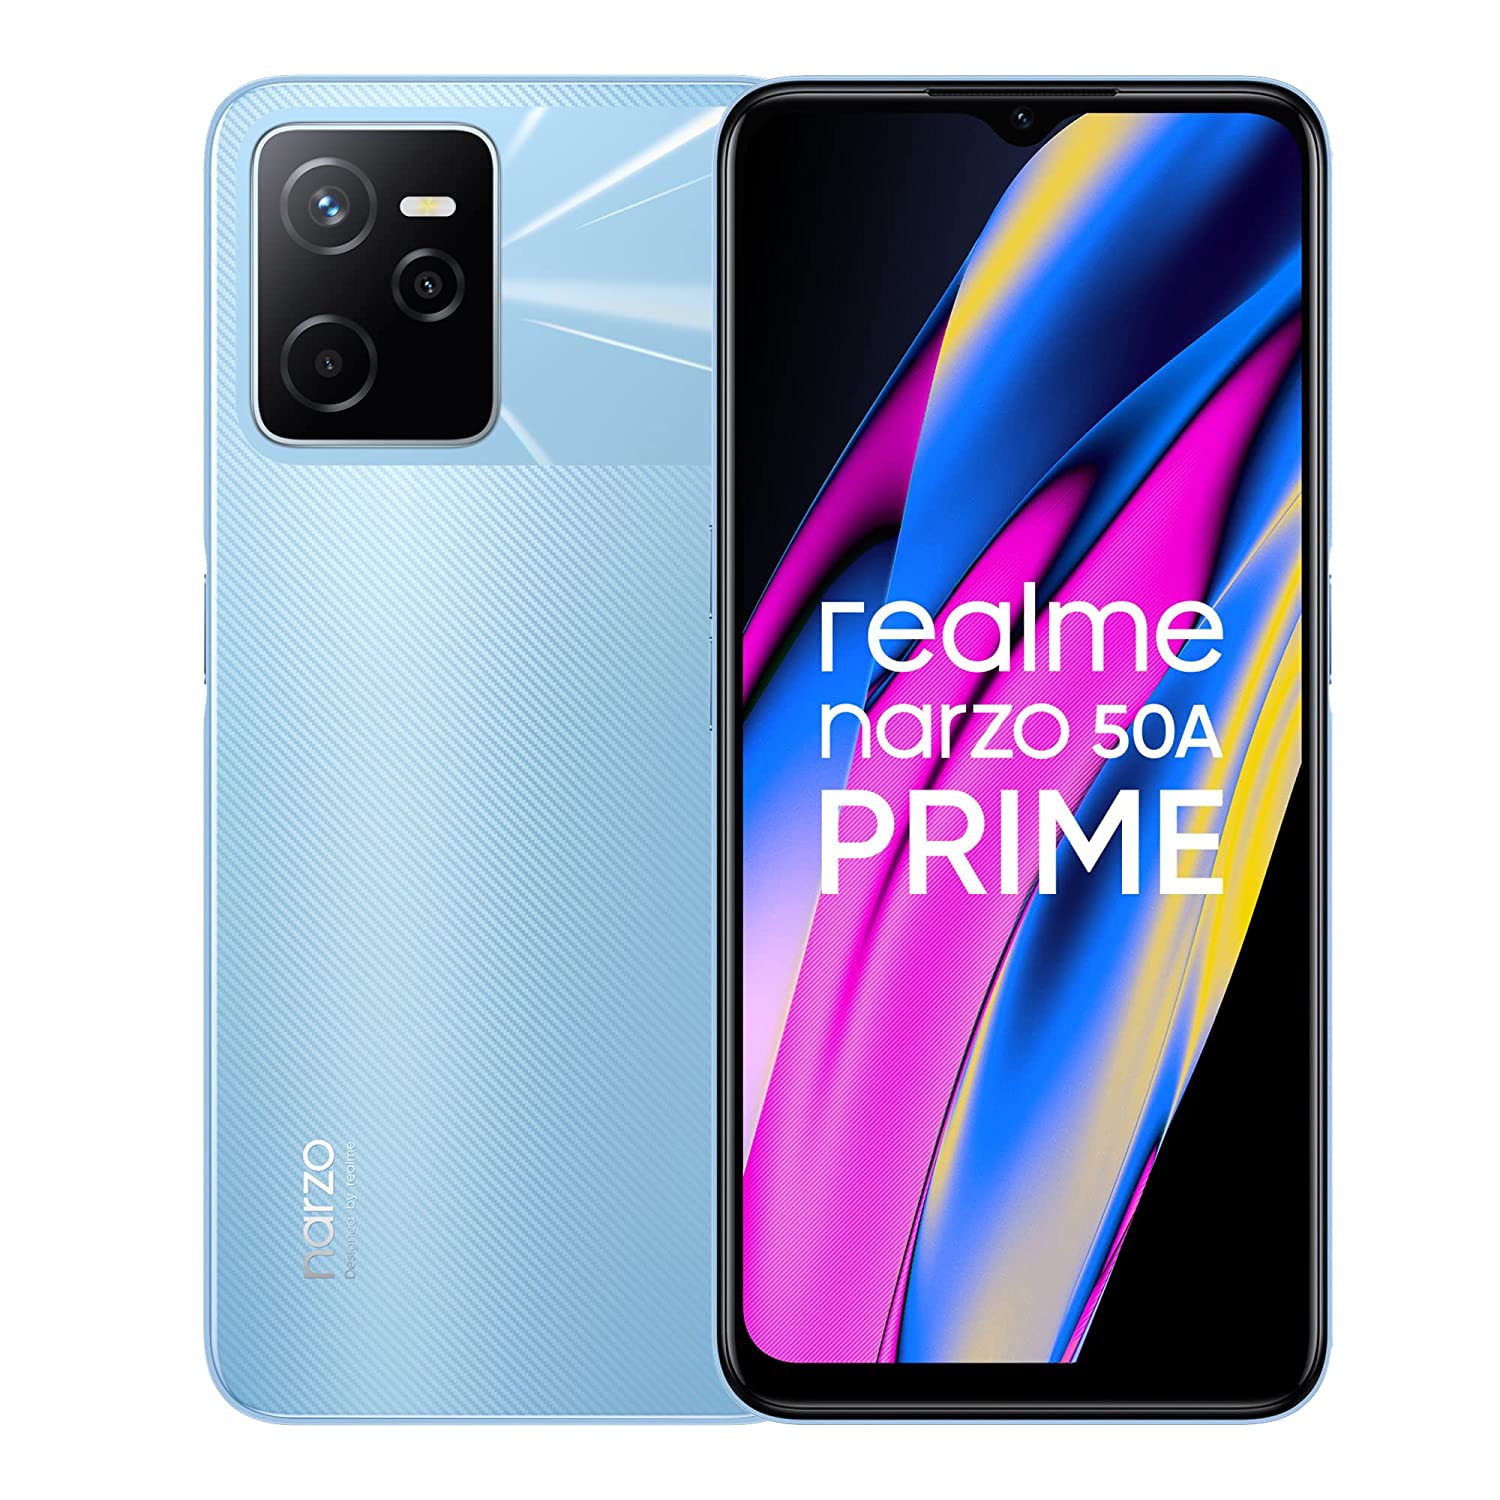 Realme narzo 50A Prime (Flash Blue, 4GB RAM+64GB Storage)